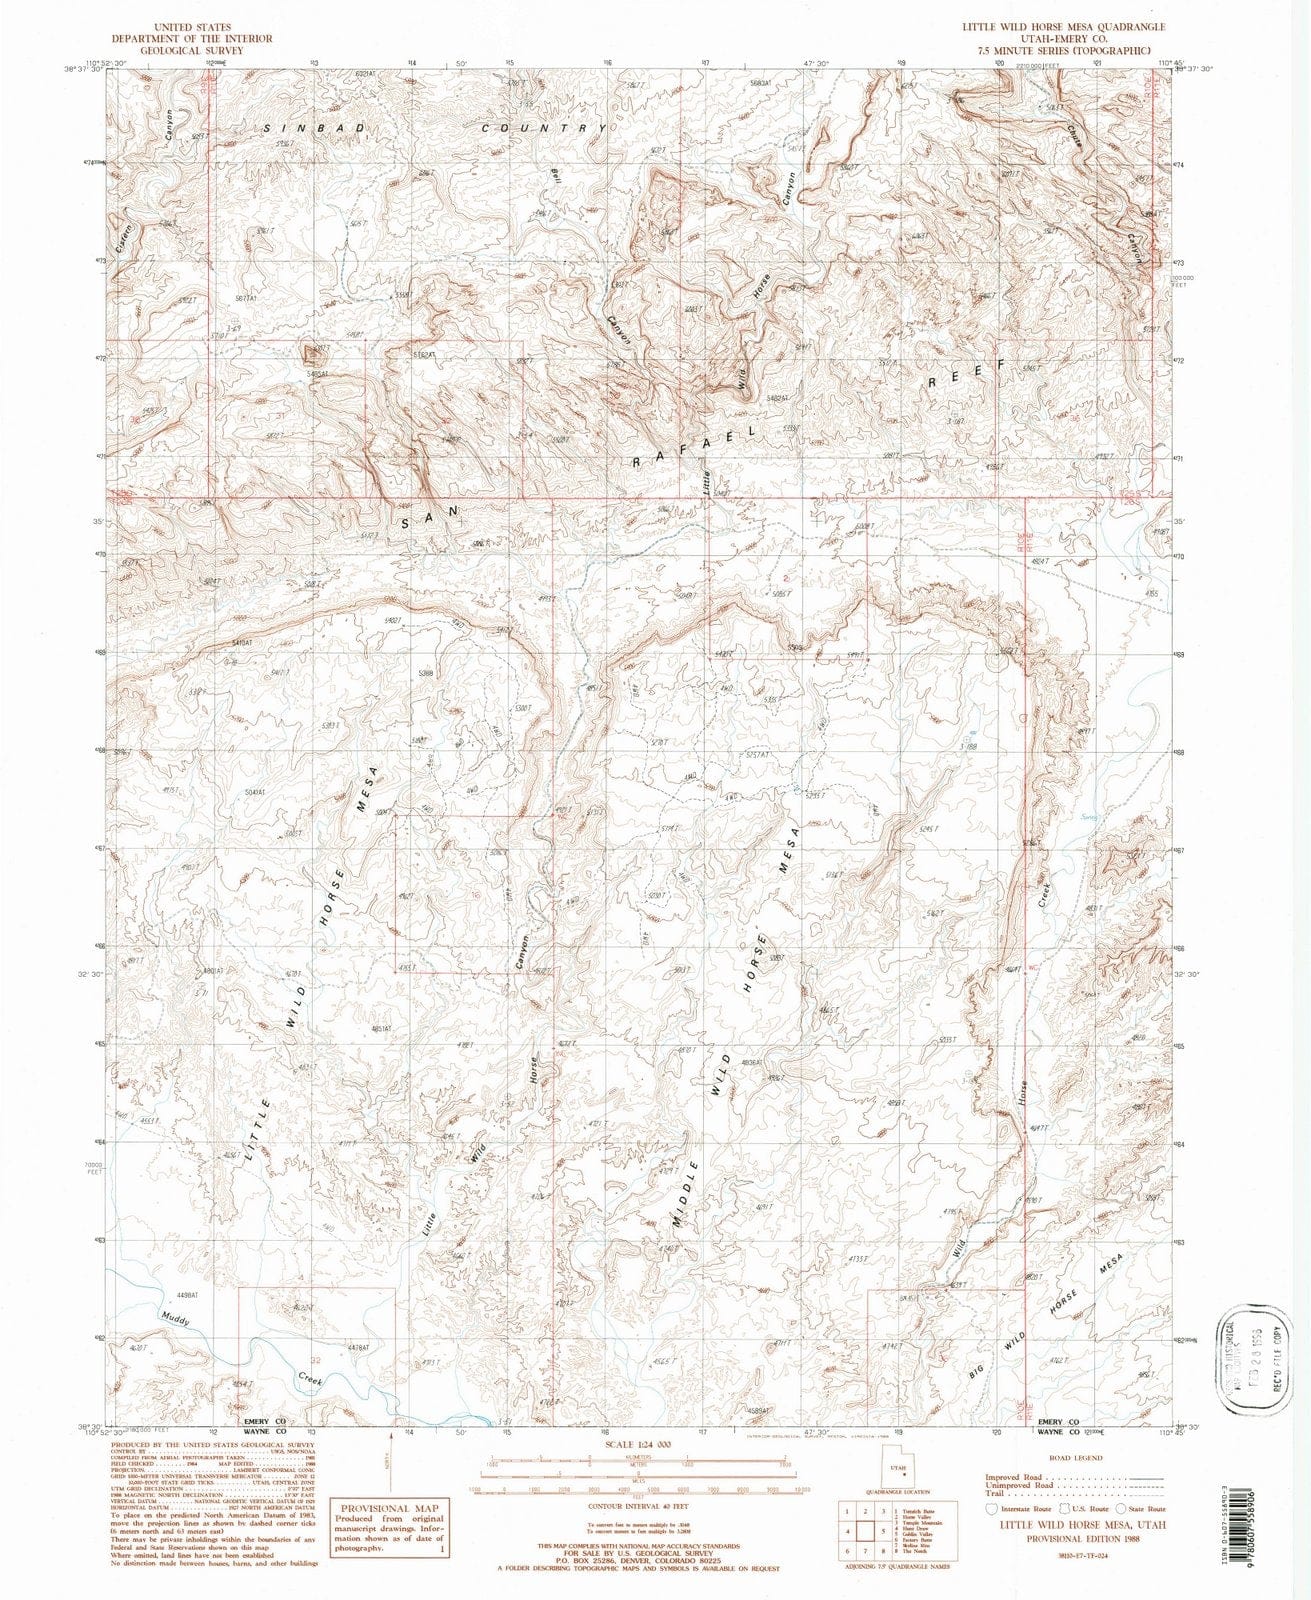 1988 Little Wild Horse Mesa, UT - Utah - USGS Topographic Map